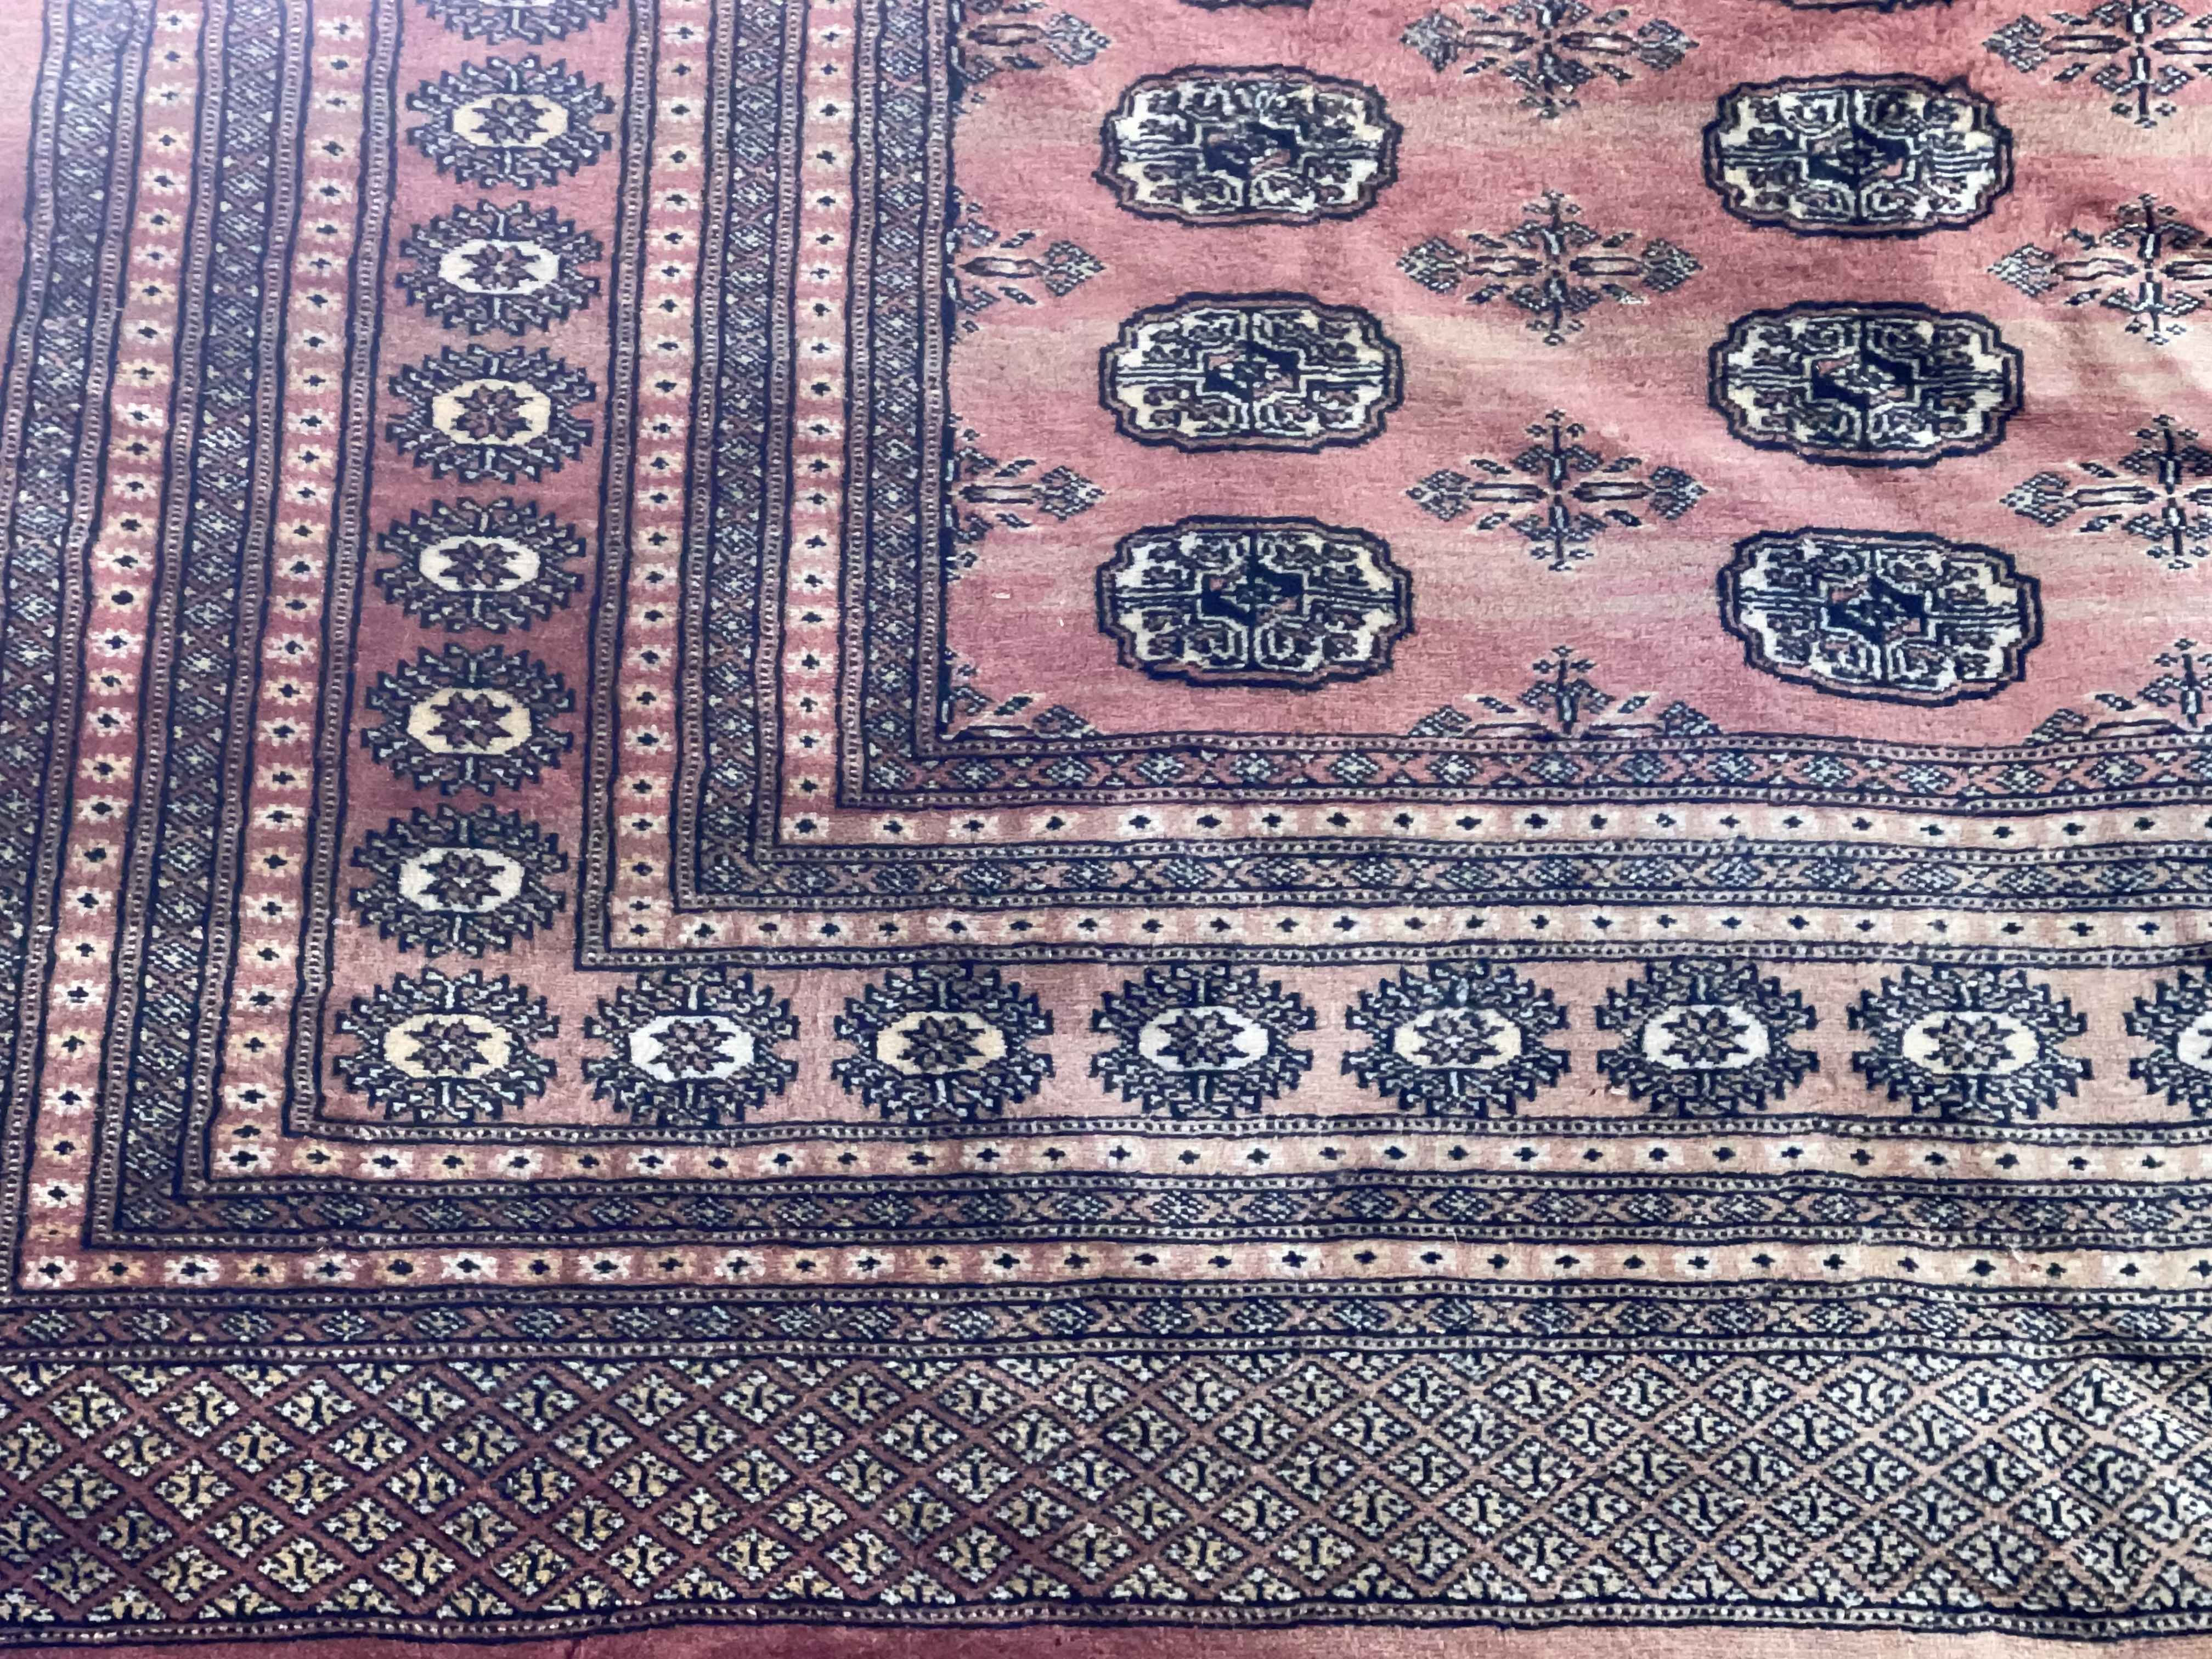 Rose pink ground Pakistani Bokhara carpet 2.75 by 3.40. - Image 2 of 2